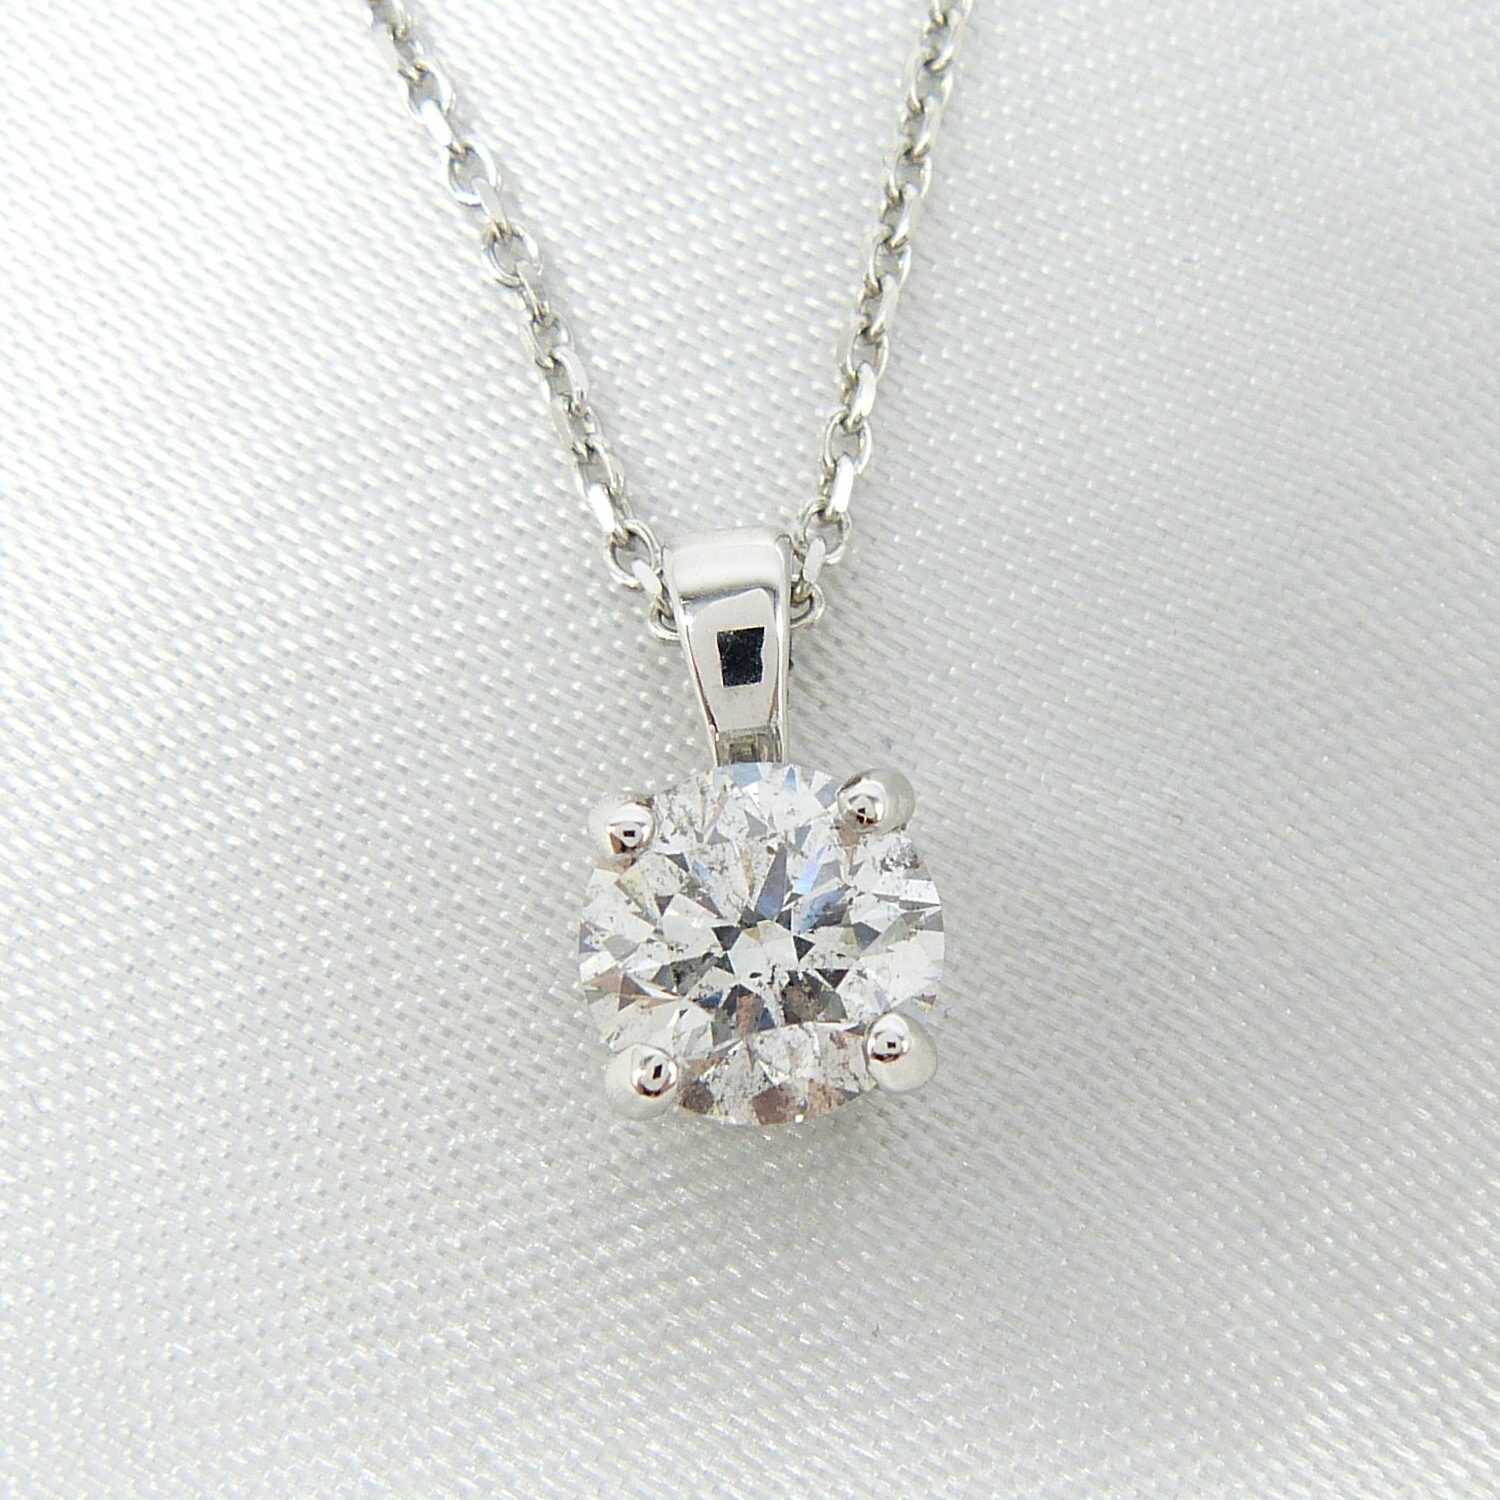 Certificated 1.24 carat, E colour round brilliant-cut diamond solitaire necklace, 18ct white gold - Image 3 of 9